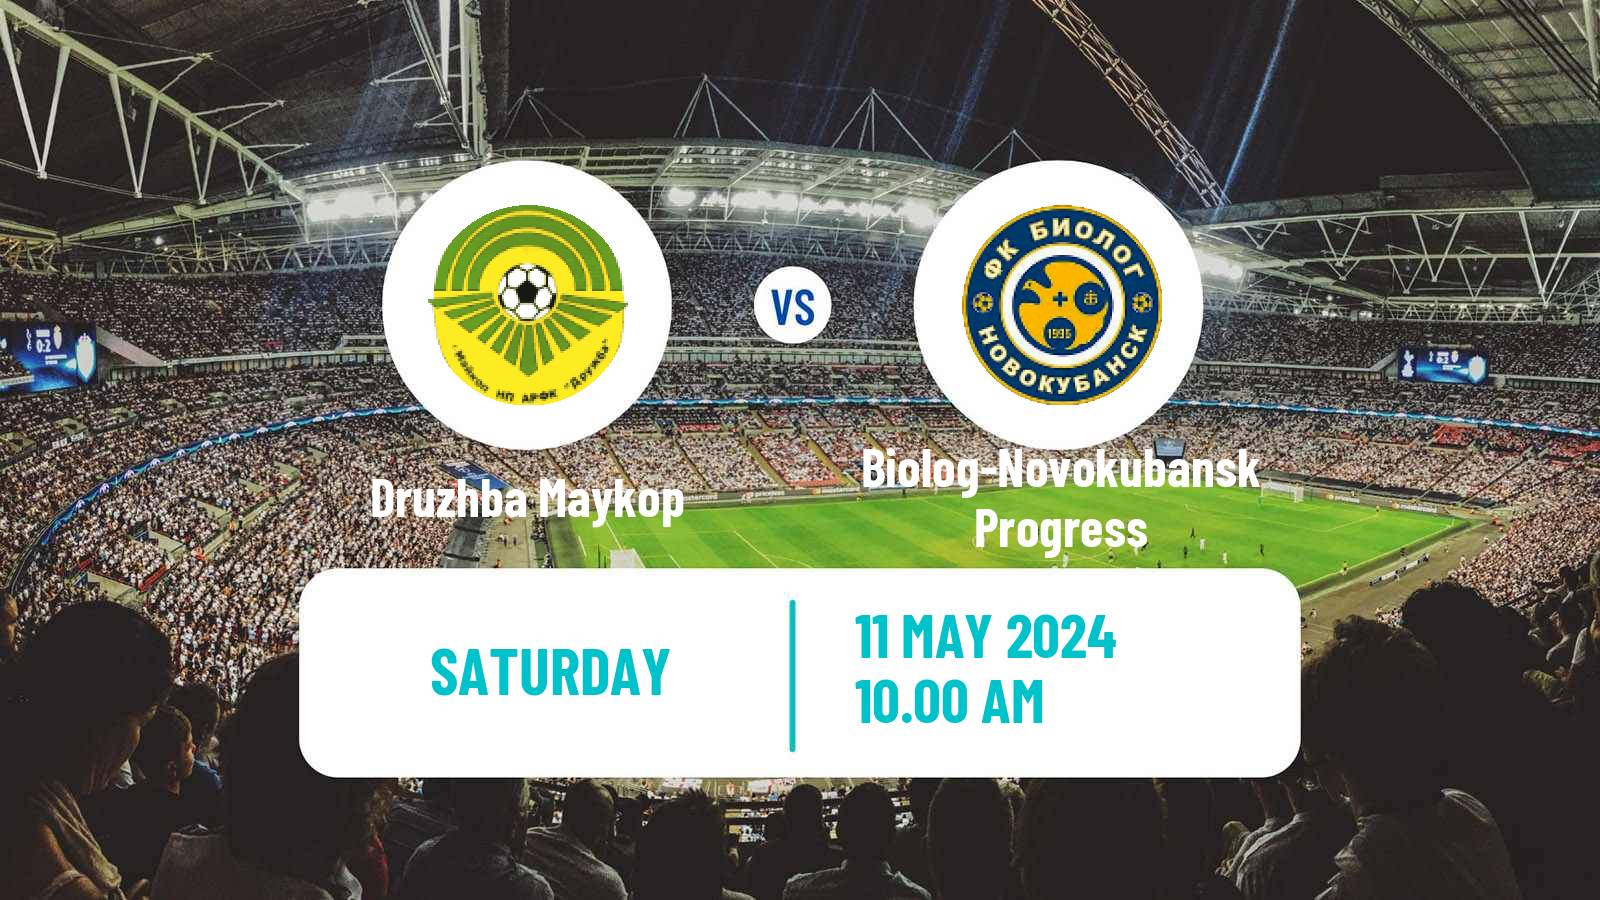 Soccer FNL 2 Division B Group 1 Druzhba Maykop - Biolog-Novokubansk Progress